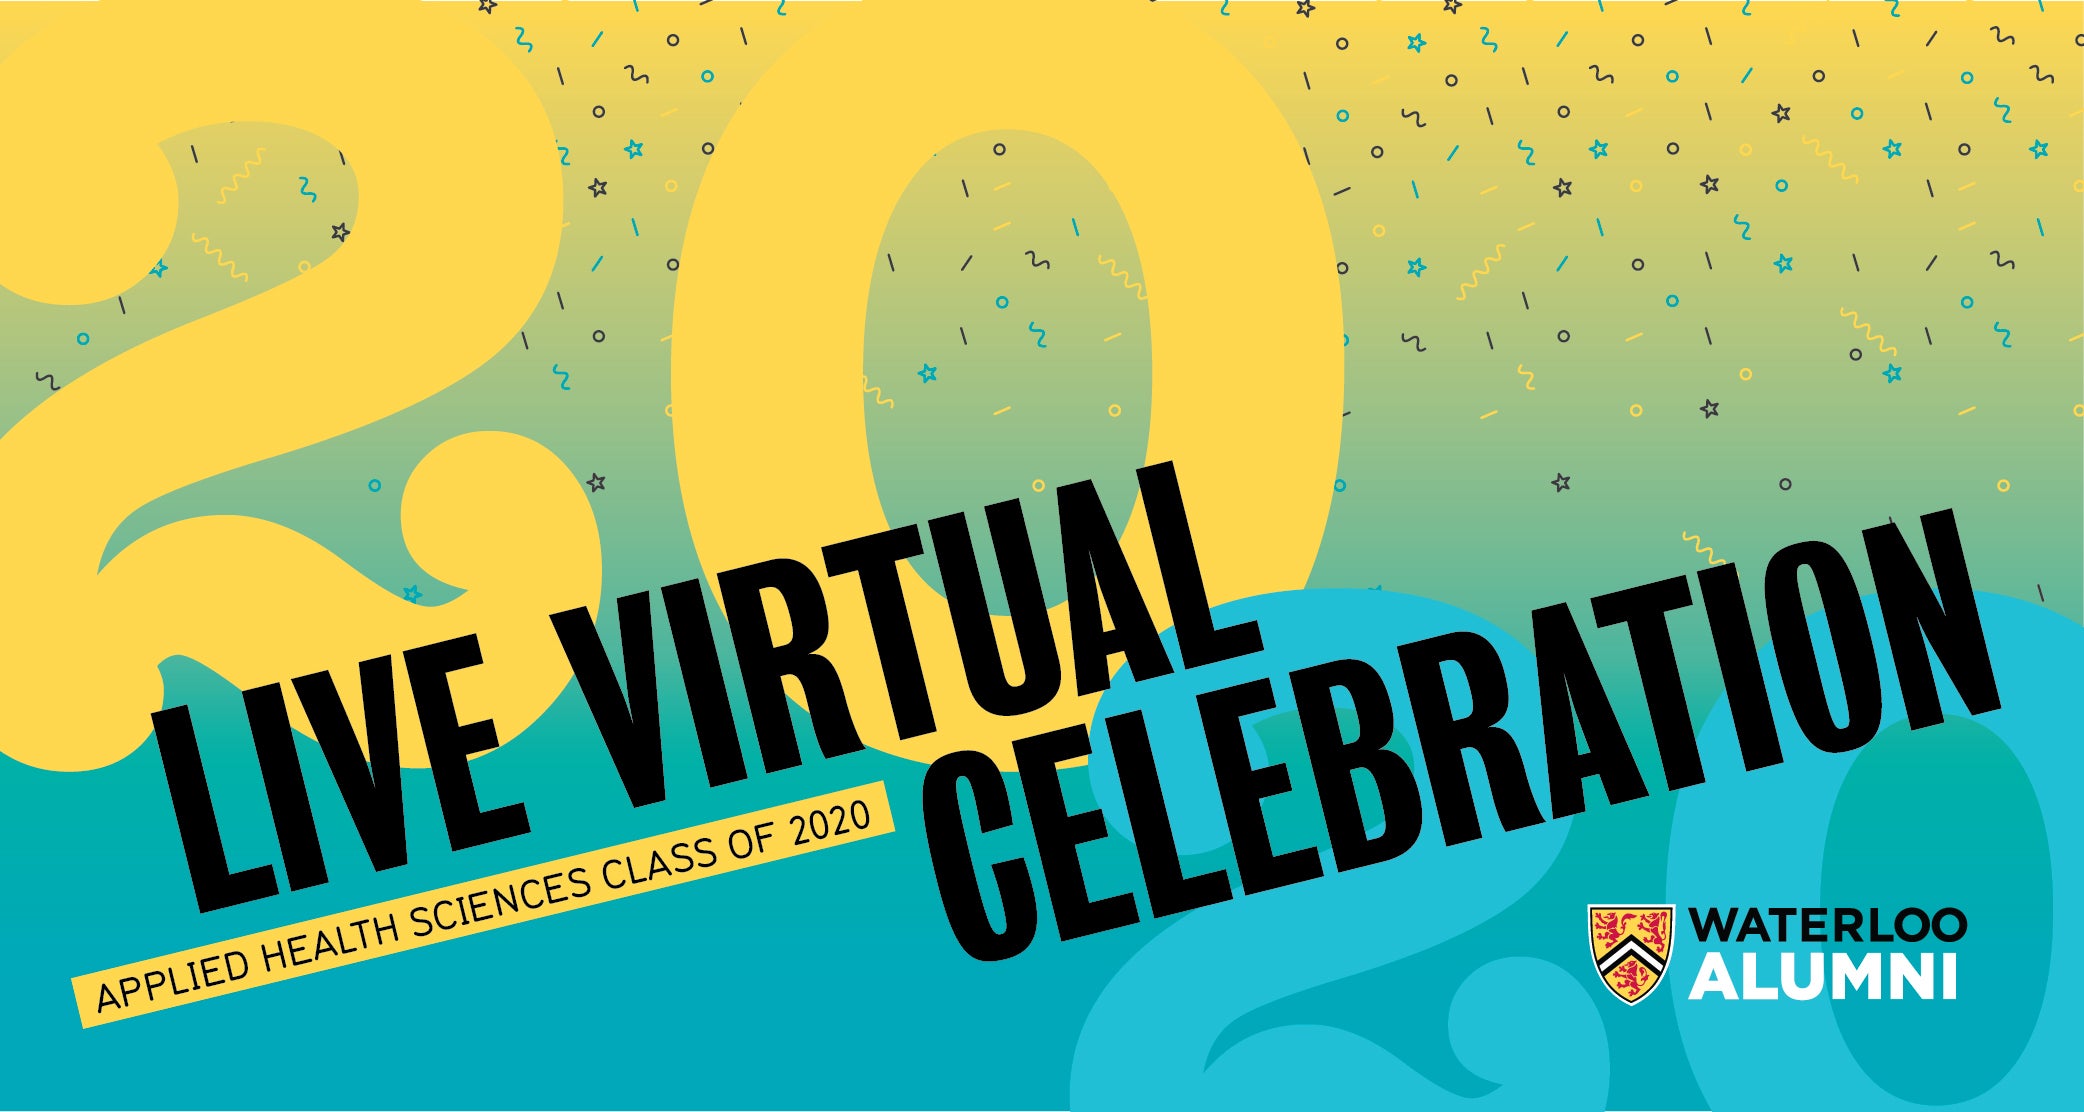 AHS 2020 Live Virtual Convocation Celebration